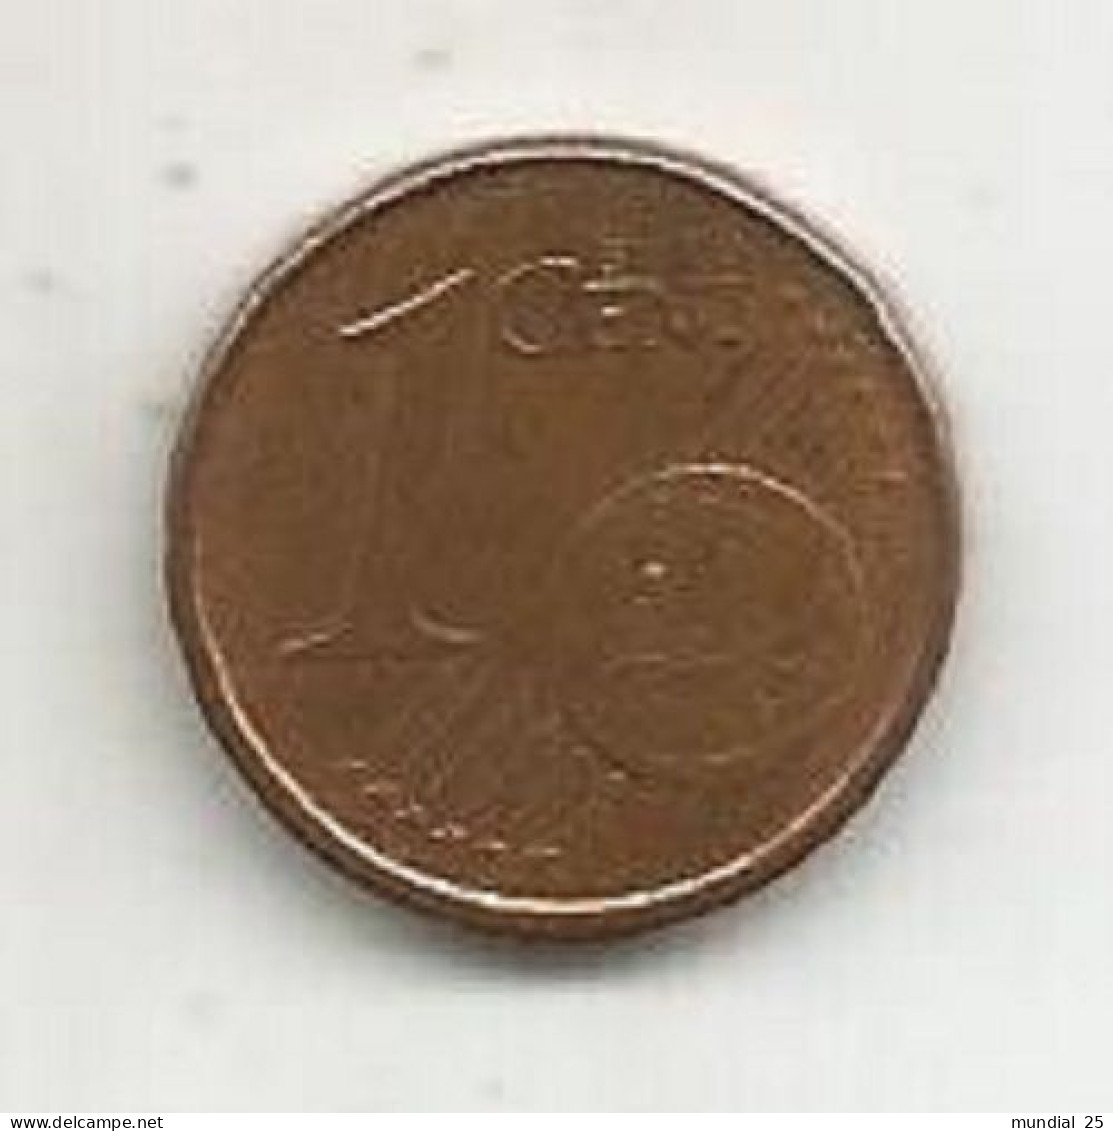 SPAIN 1 EURO CENT 2003 - España